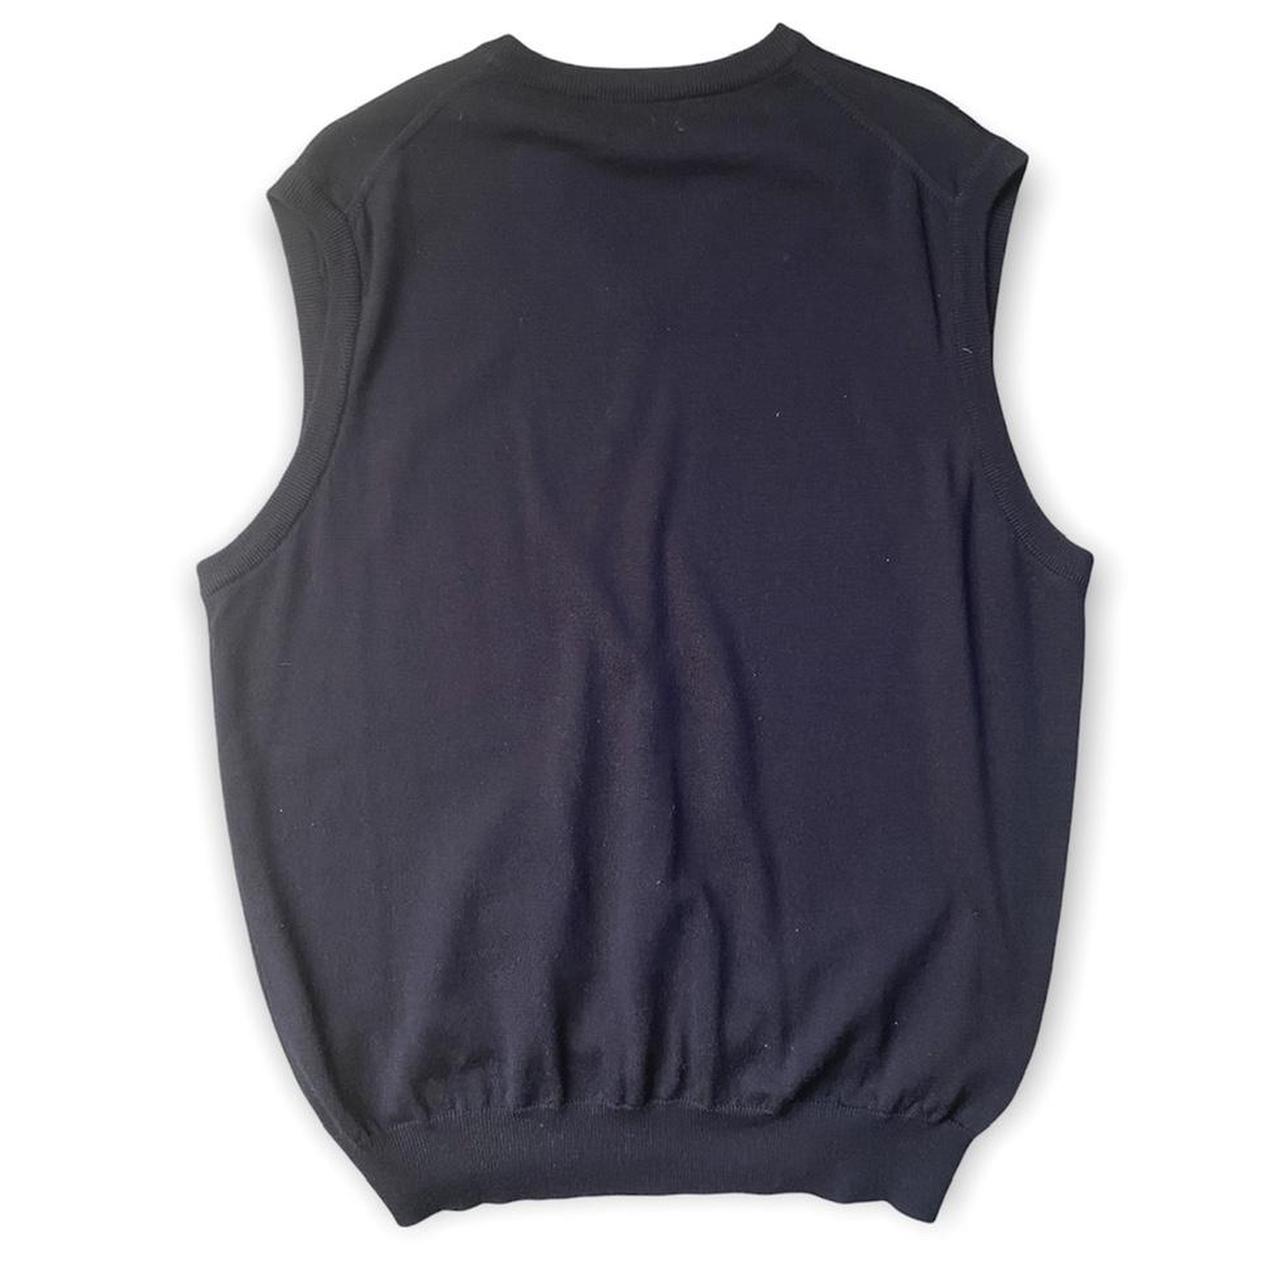 Product Image 2 - 100% wool Sweater vest. Black